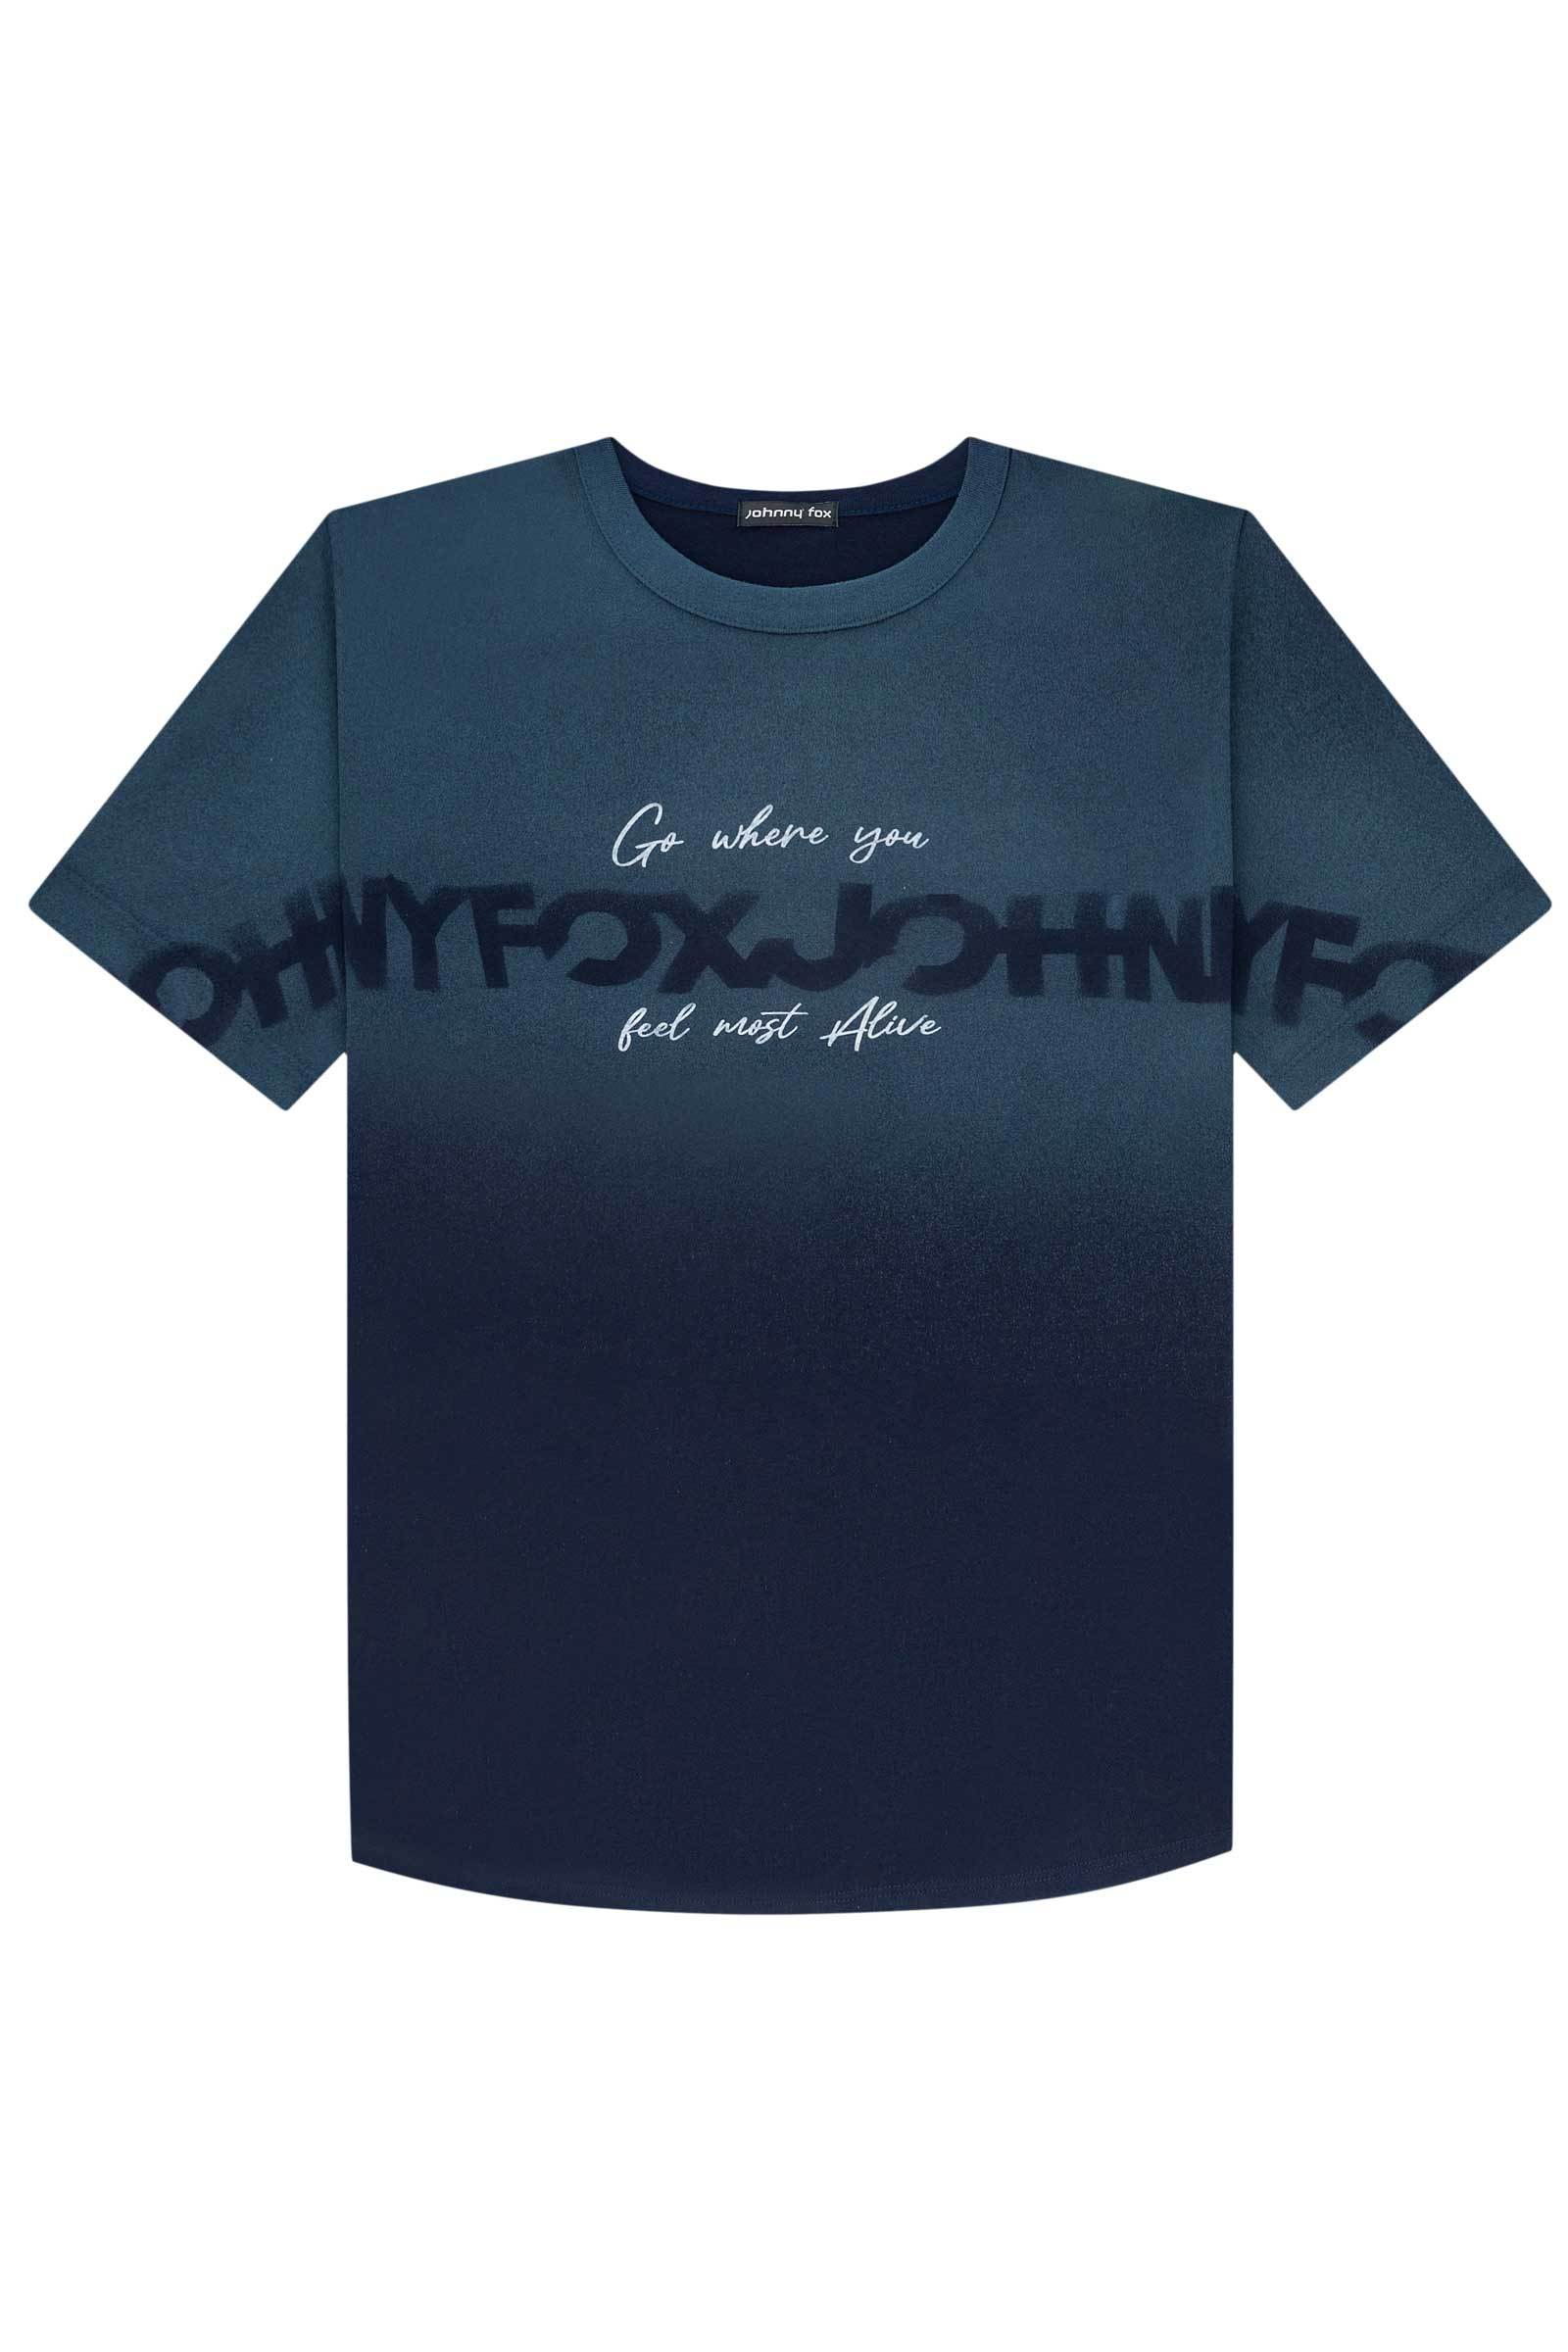 Camiseta em Meia Malha 75099 Johnny Fox